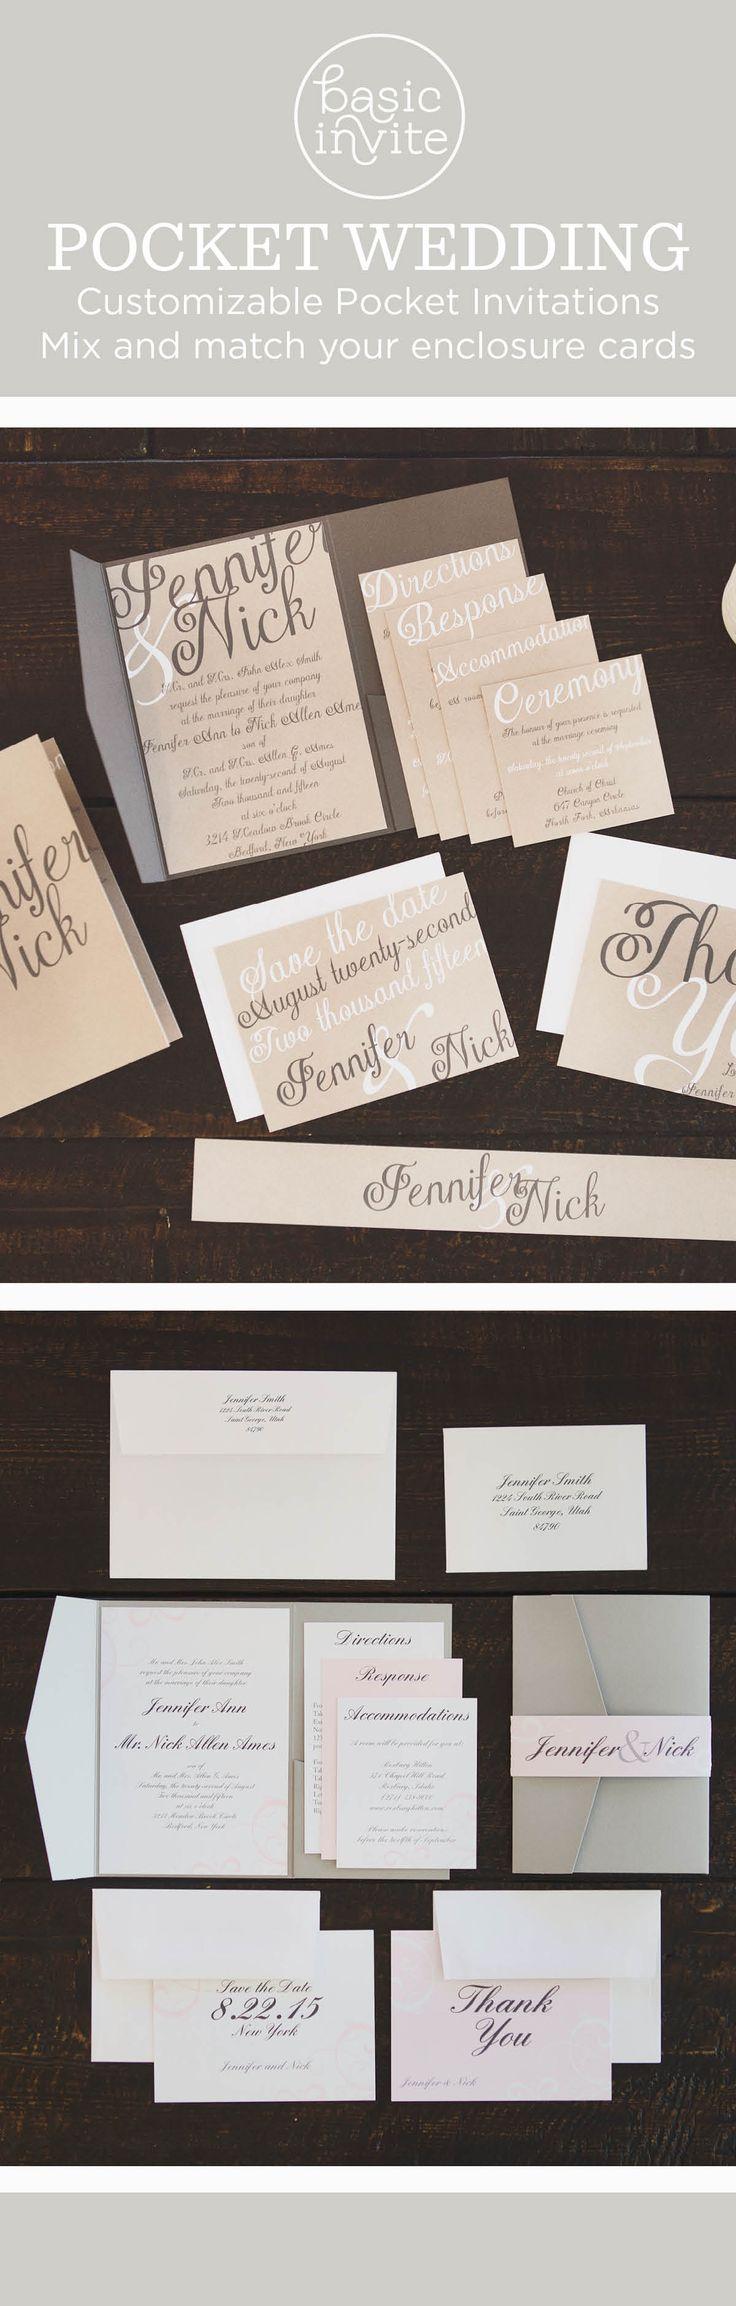 Hochzeit - Paper, Invitations, Save-the-Dates, Menu Cards Etc!